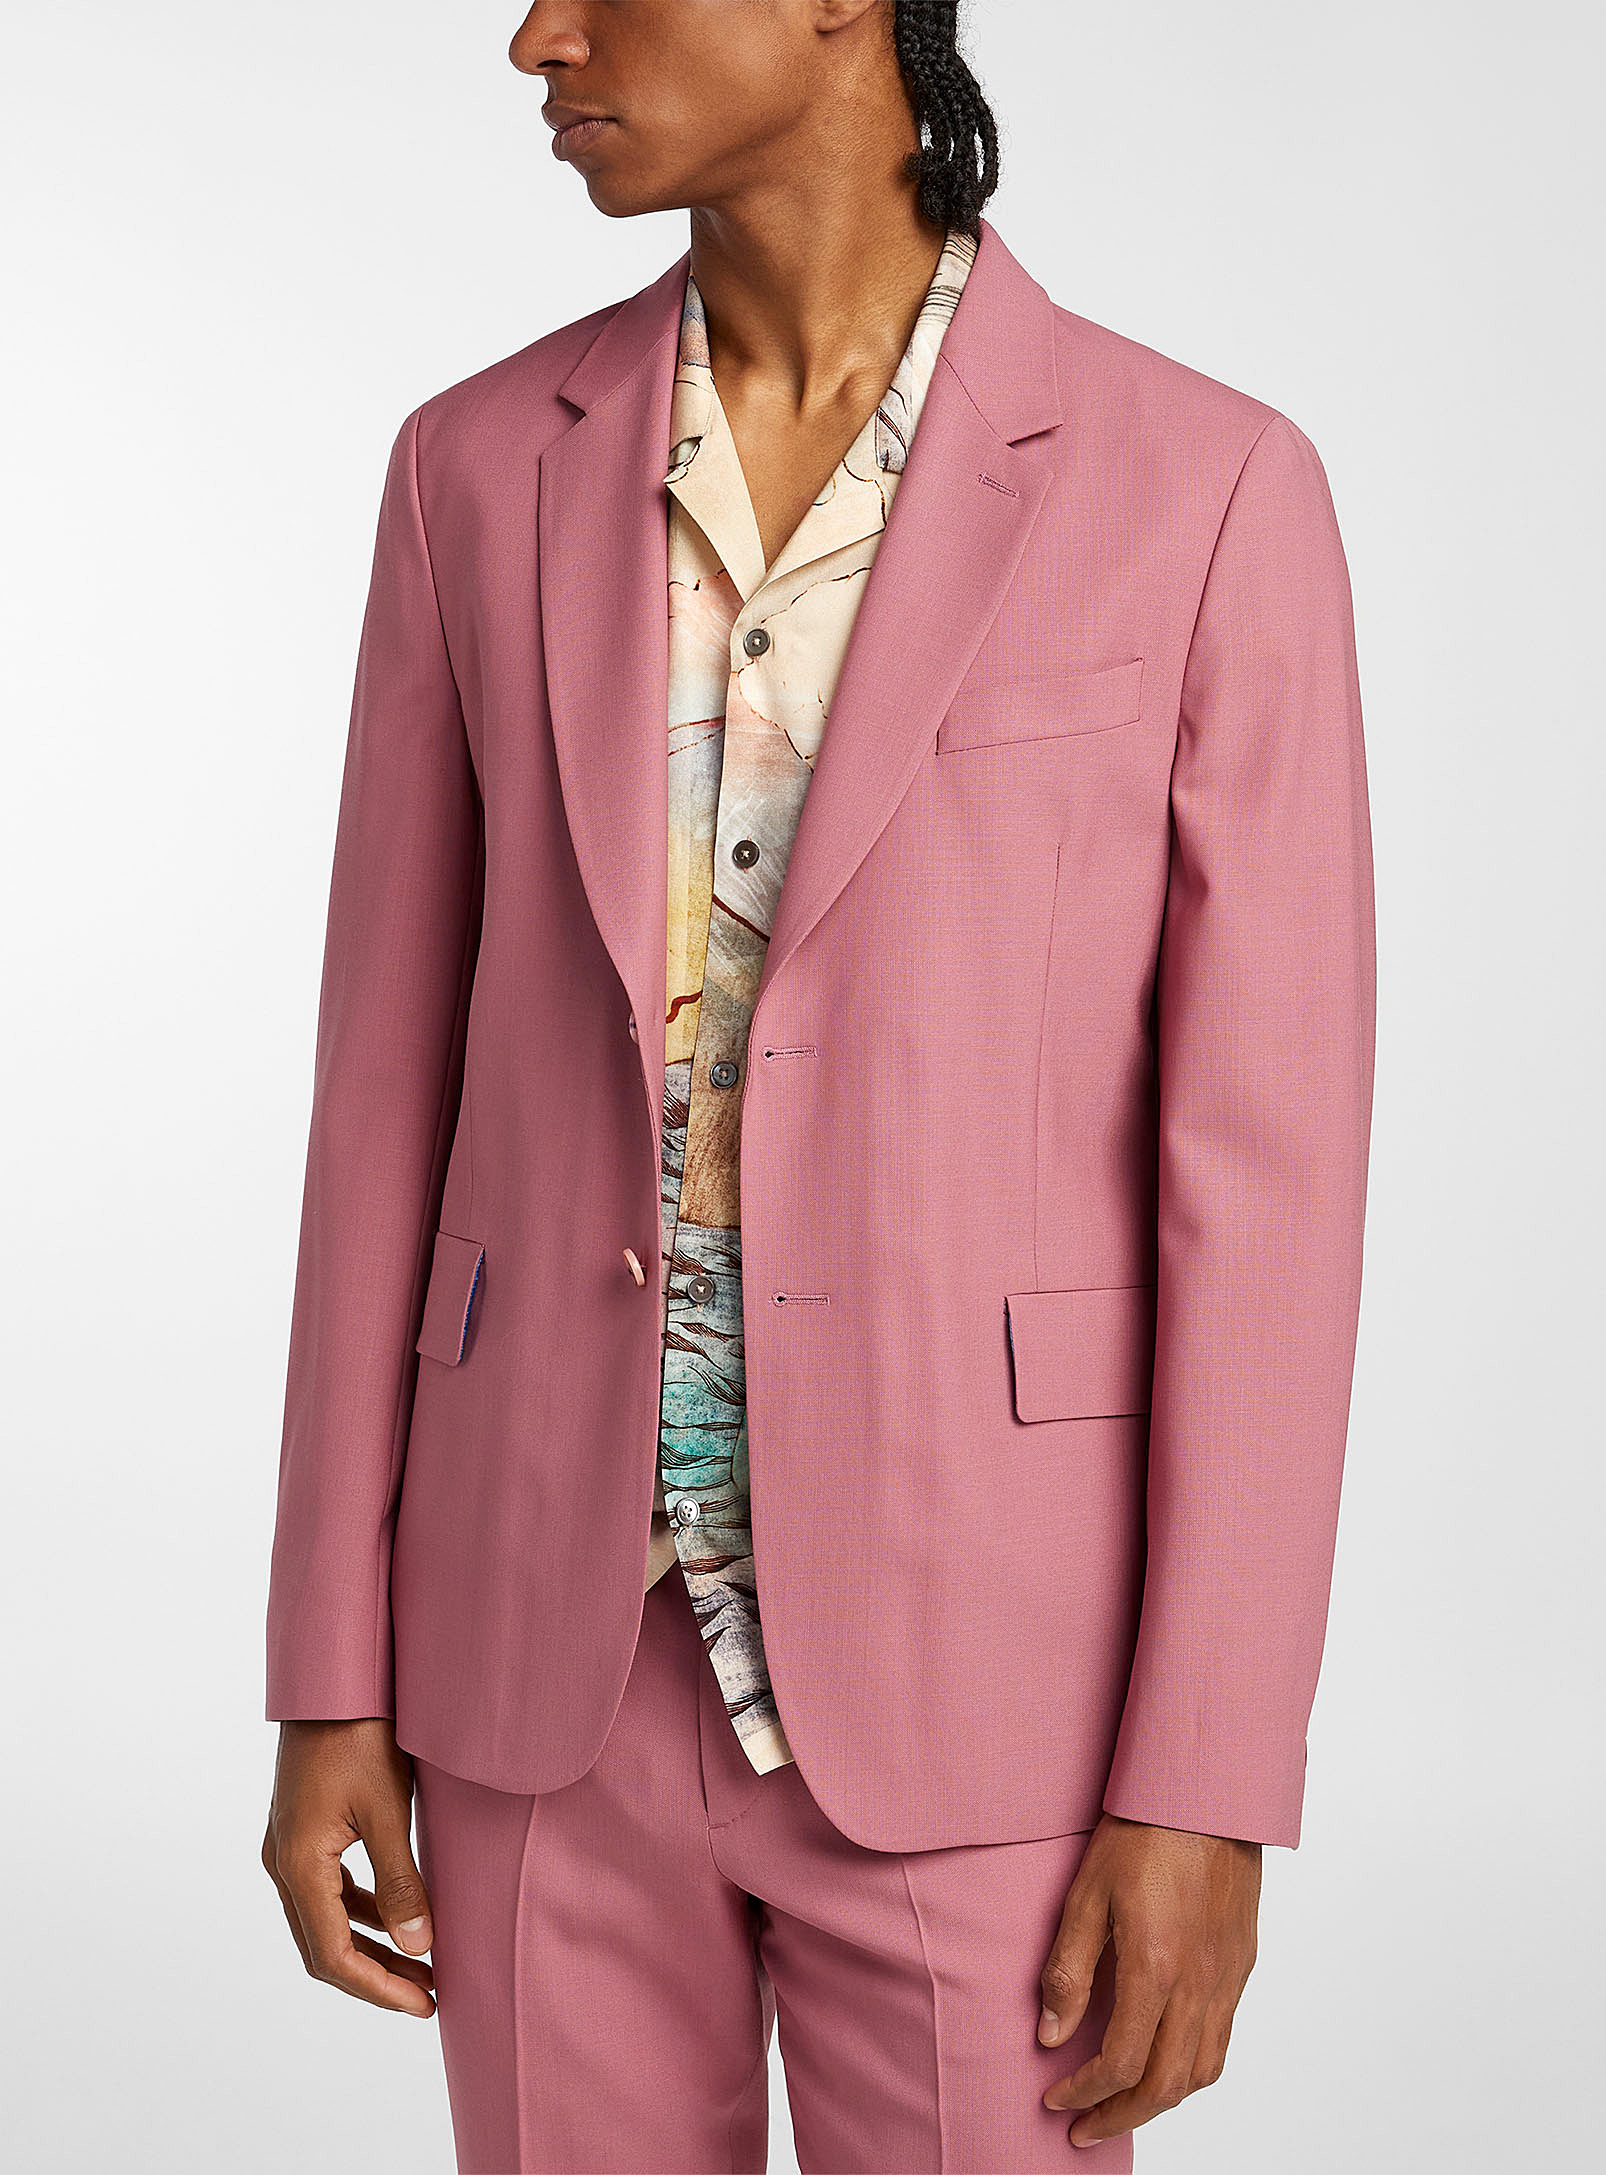 Paul Smith - Men's Pure wool pink jacket